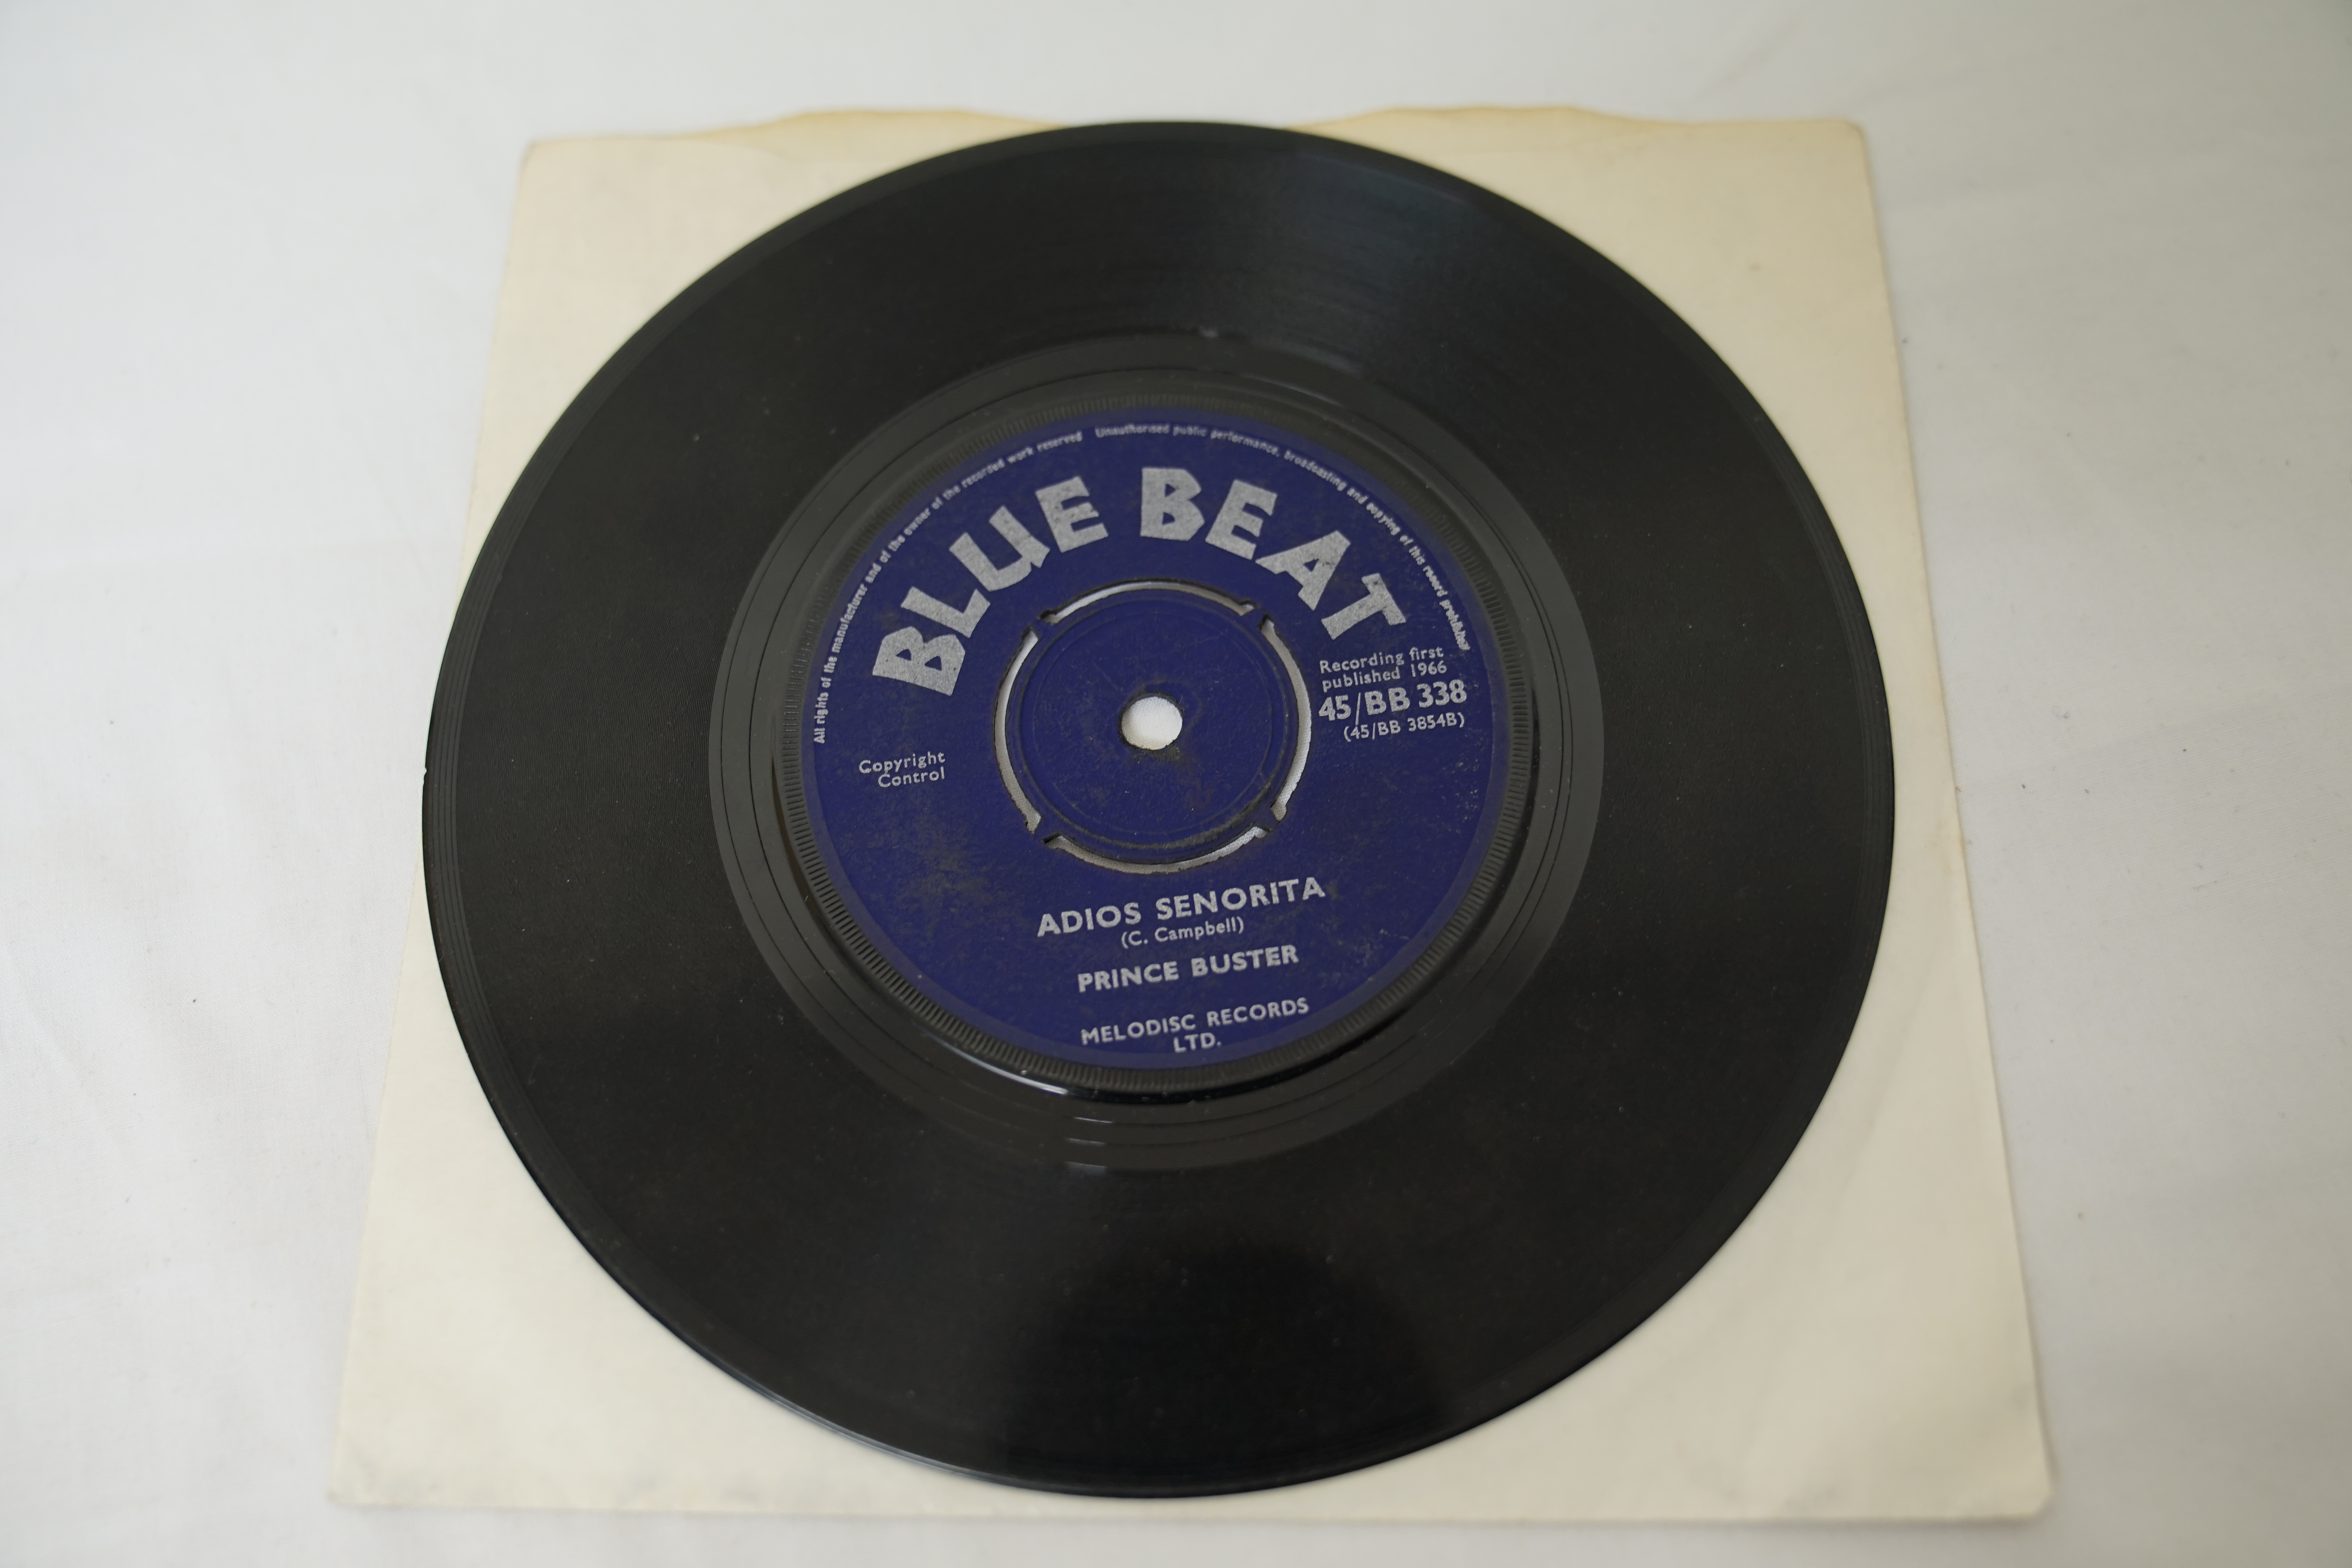 Vinyl - 6 UK Blue Beat Records / Prince Buster 7" singles, Reggae / Ska / Skinhead Reggae, - Image 13 of 25